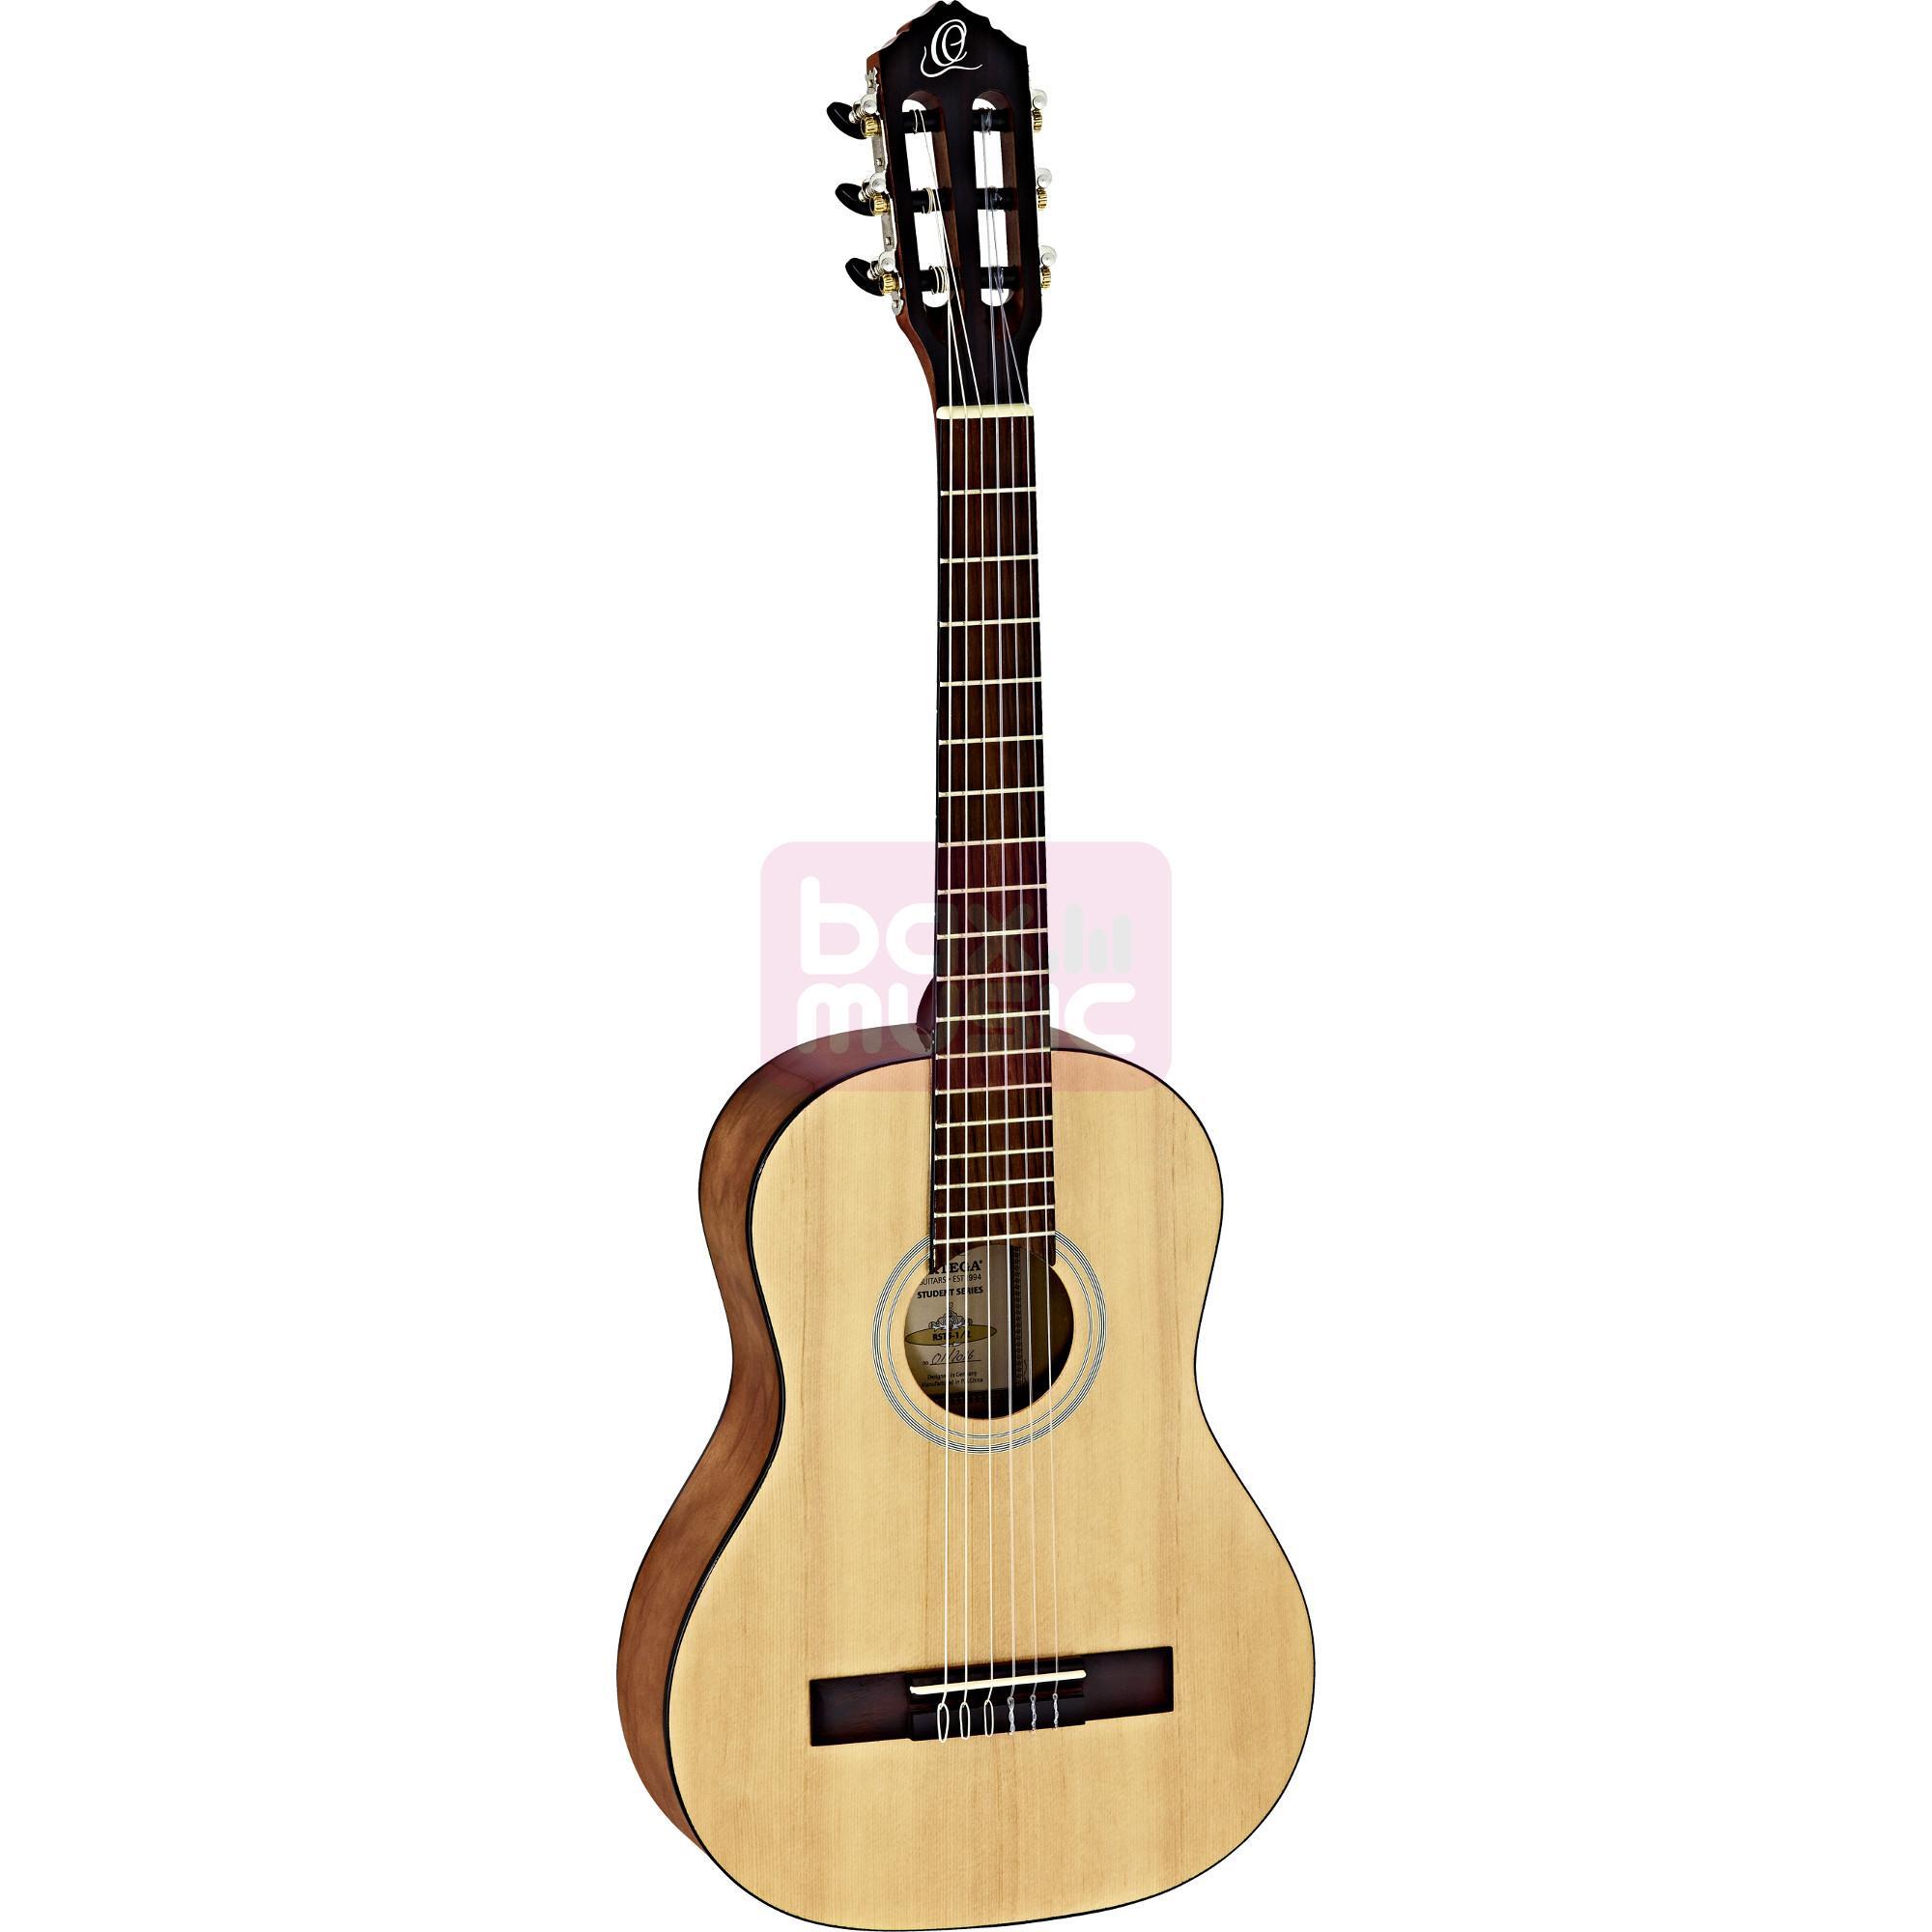 Ortega Student Series RST 5 12 klassieke gitaar naturel